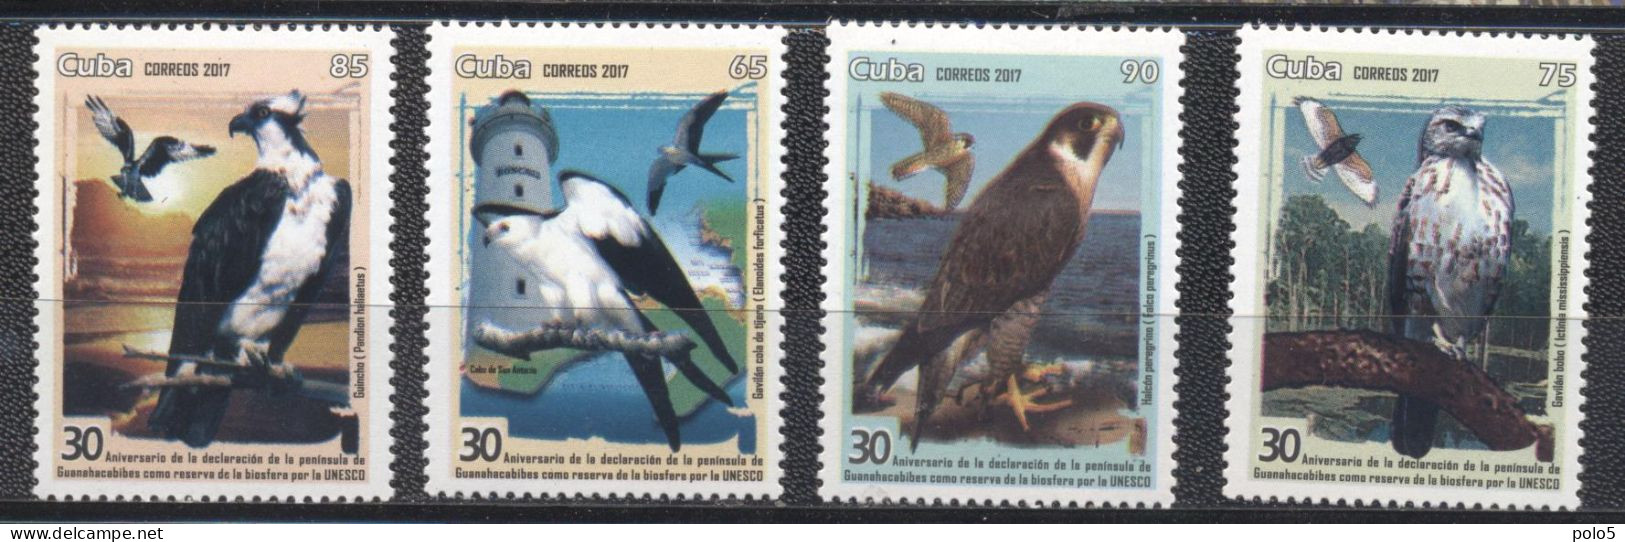 Cuba 2017-Birds-The 30th Anniversary Of The Guanacahabibes Pininsula Biosphere Reserve Set (4v) - Ungebraucht